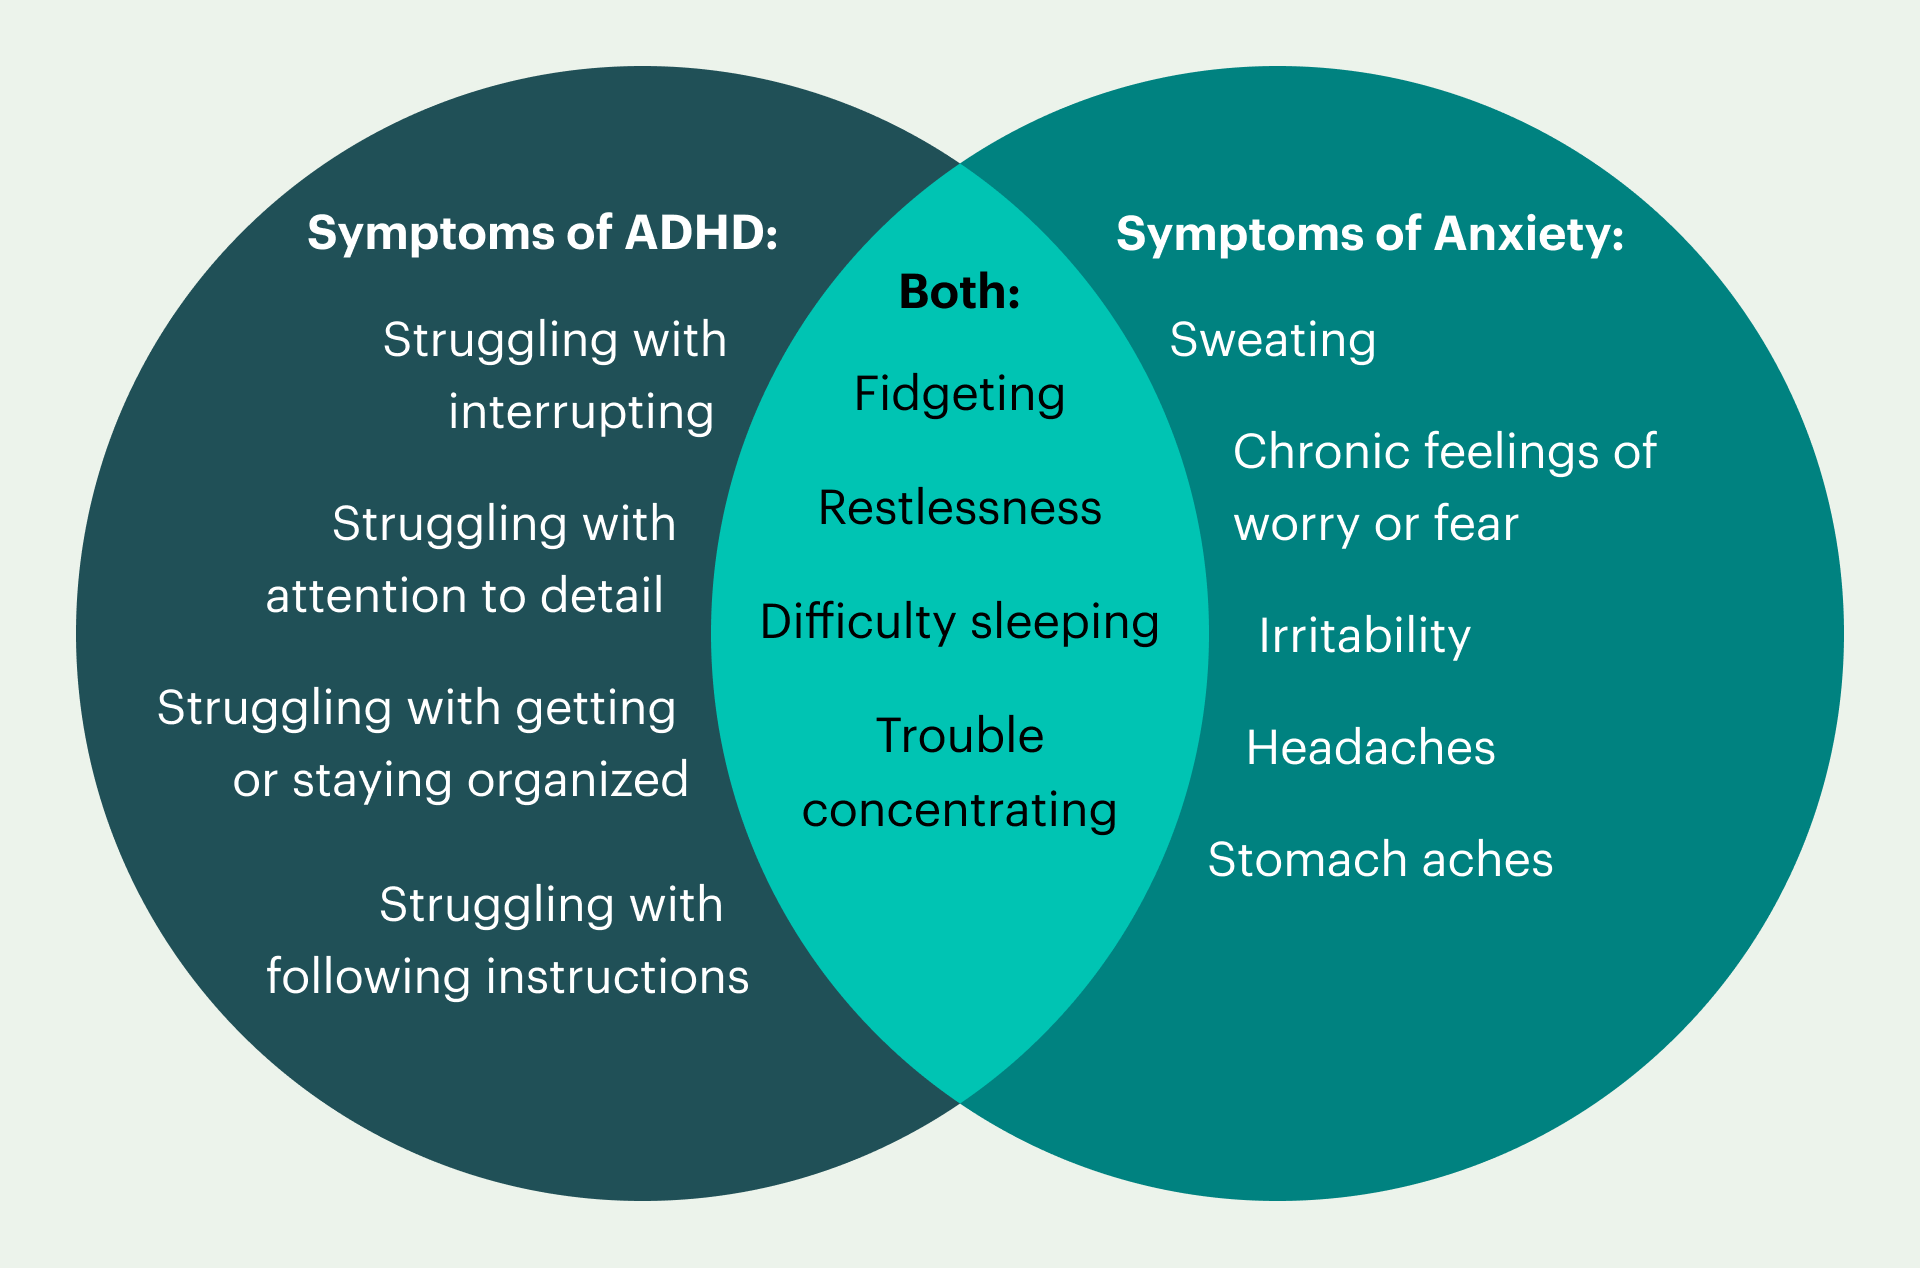 A Venn Diagram listing the symptoms of ADHD, Anxiety, and both 